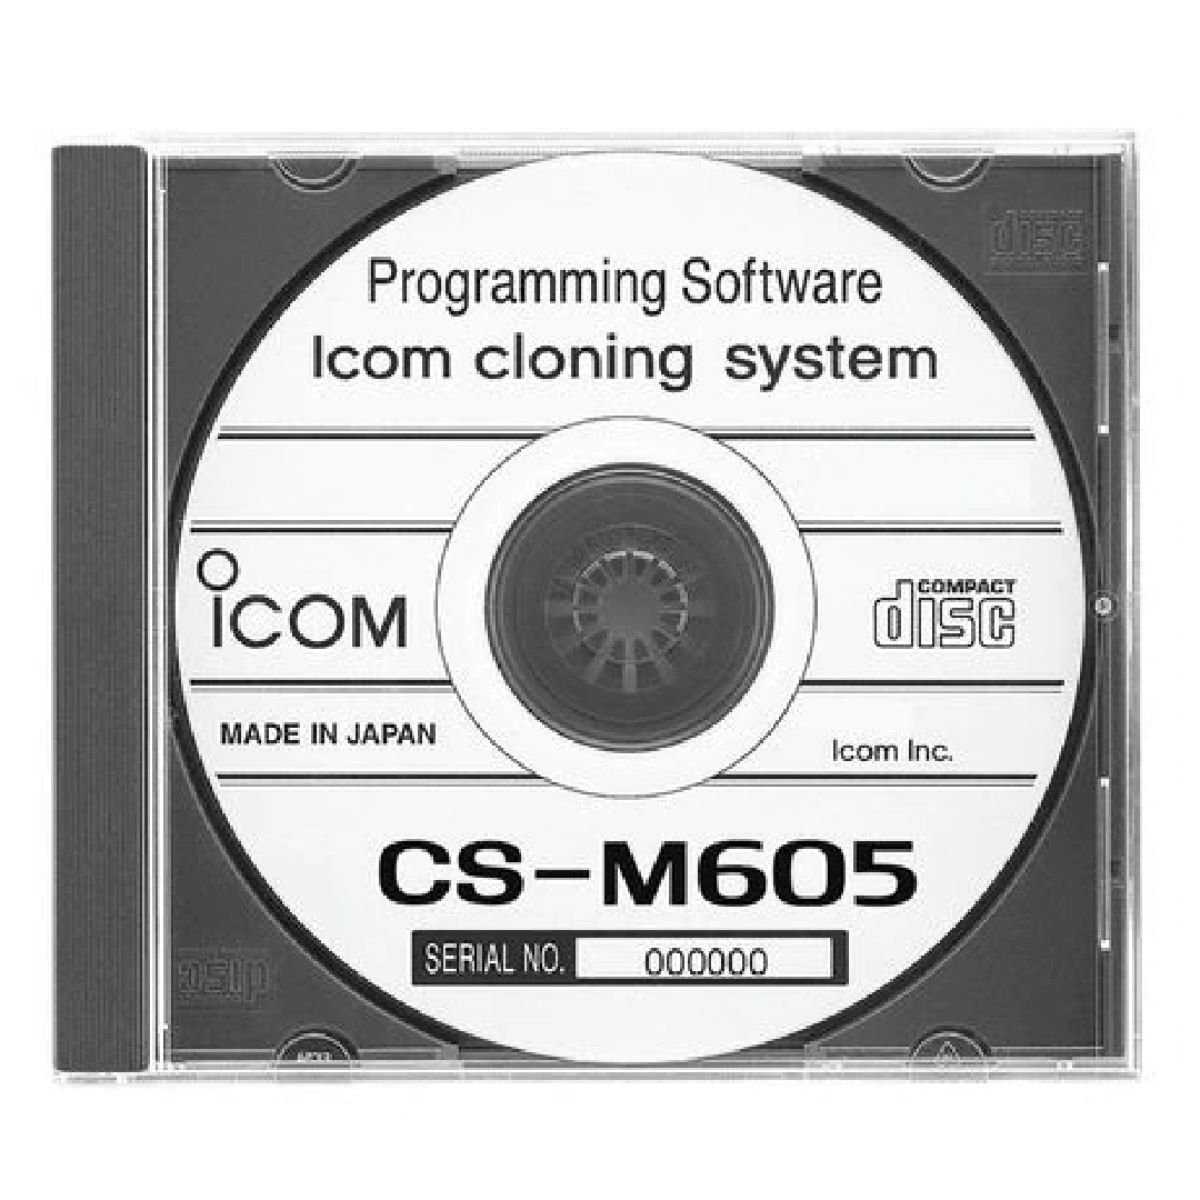 ICOM CS-M605 Dealer Programming Software